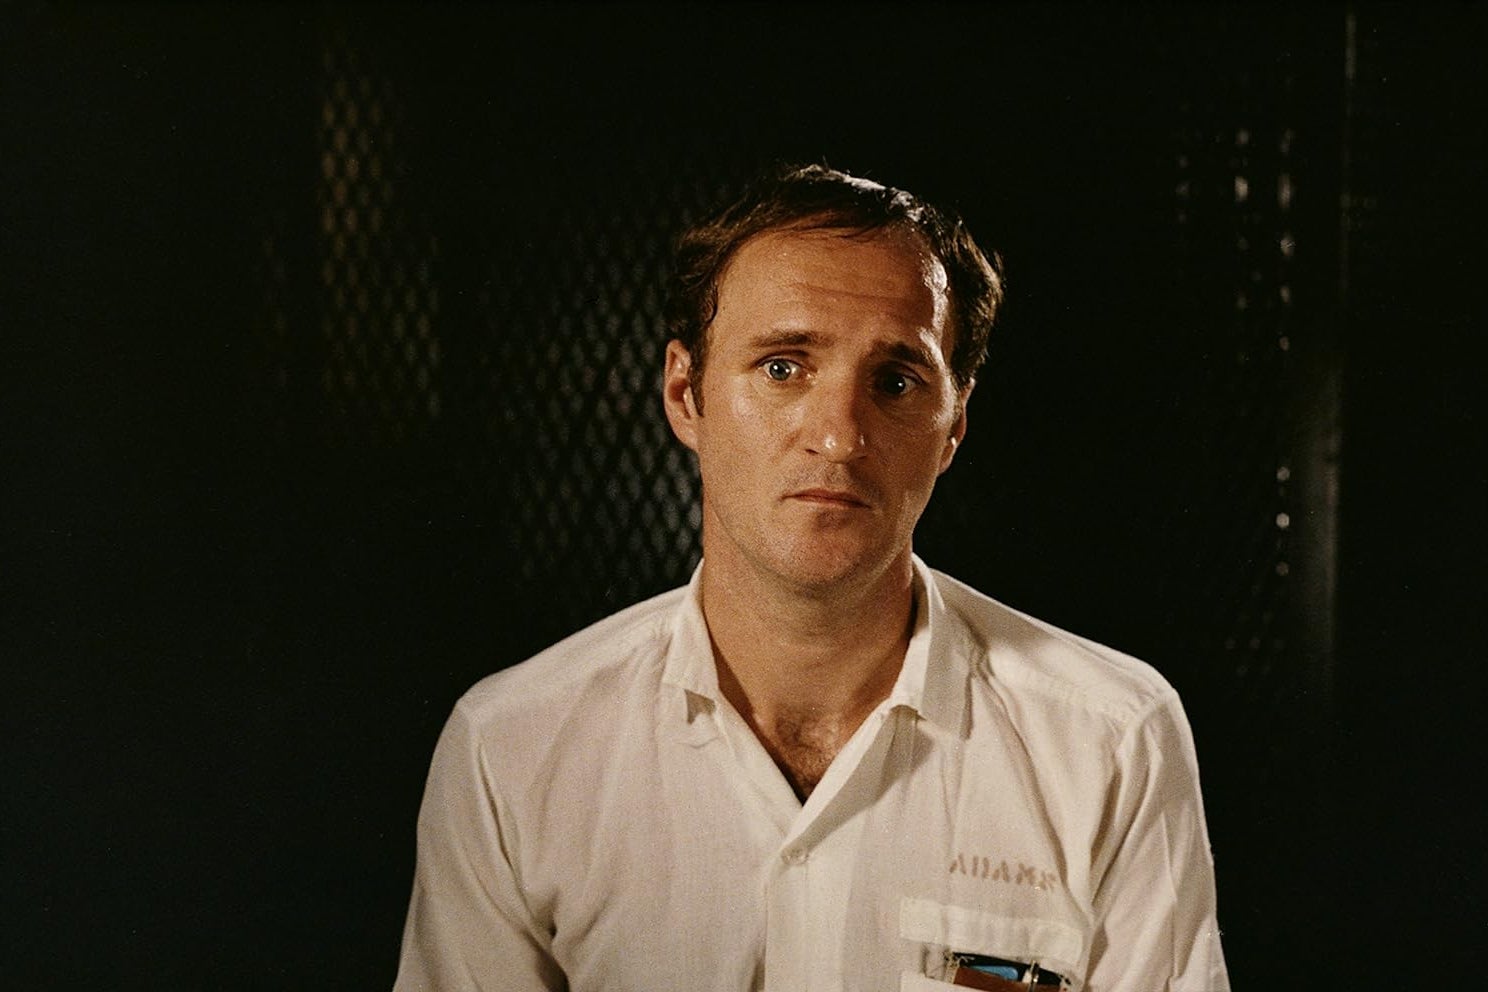 A portrait of Randall Adams in prison.